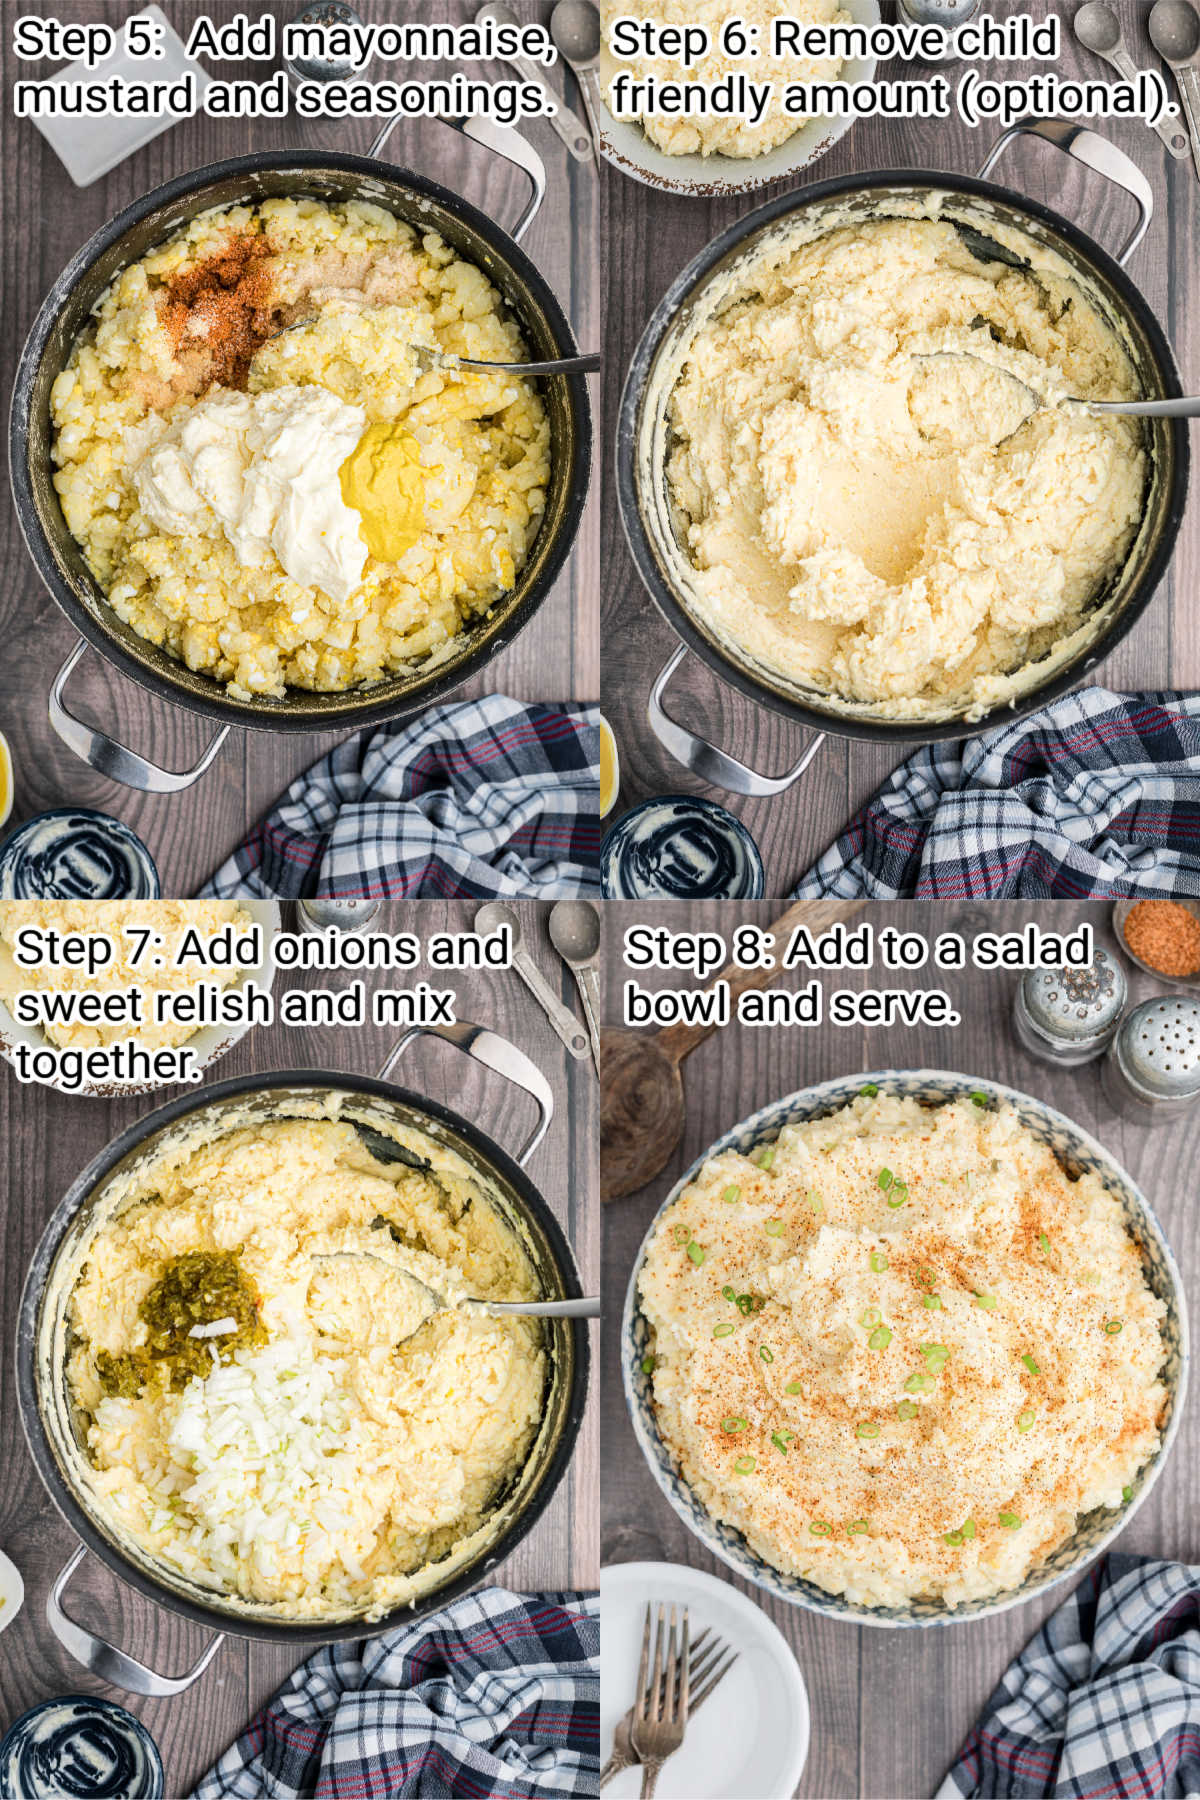 four images showing how to make a cajun potato salad steps 5-8